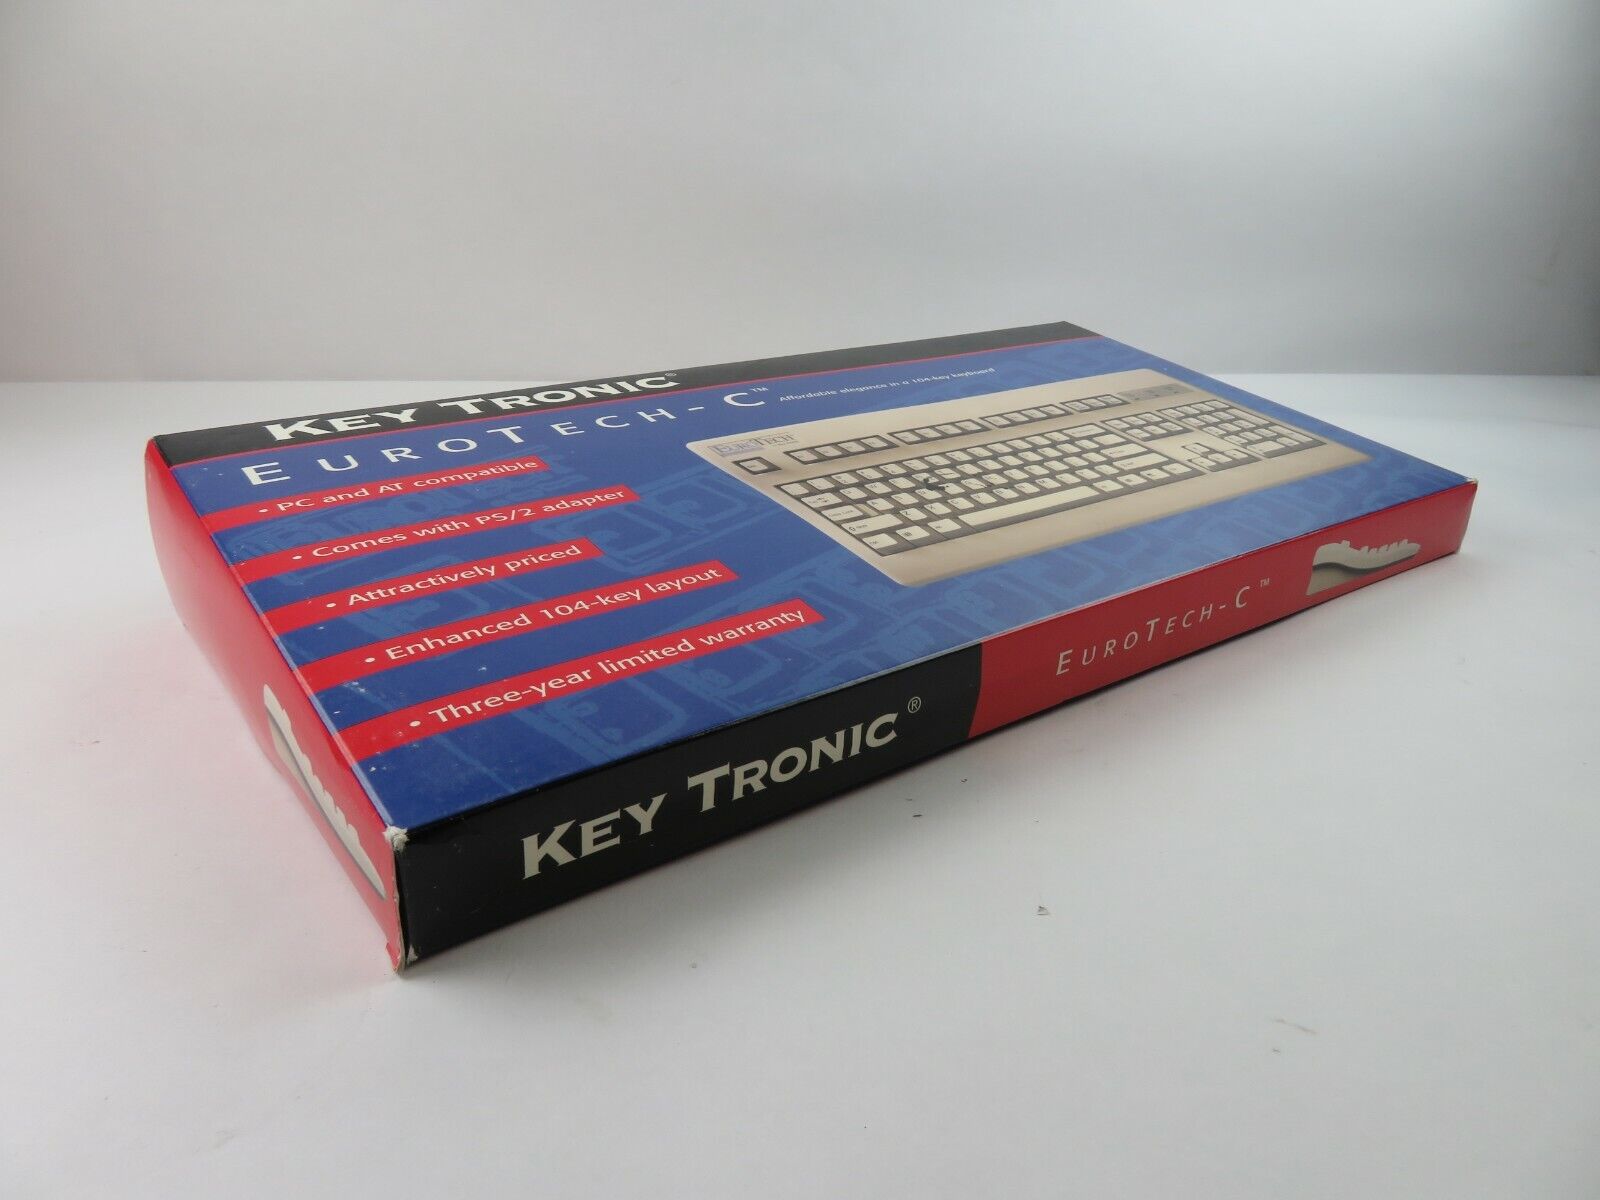 KeyTronic Eurotech-C PS/2 Keyboard - German QWERTZ